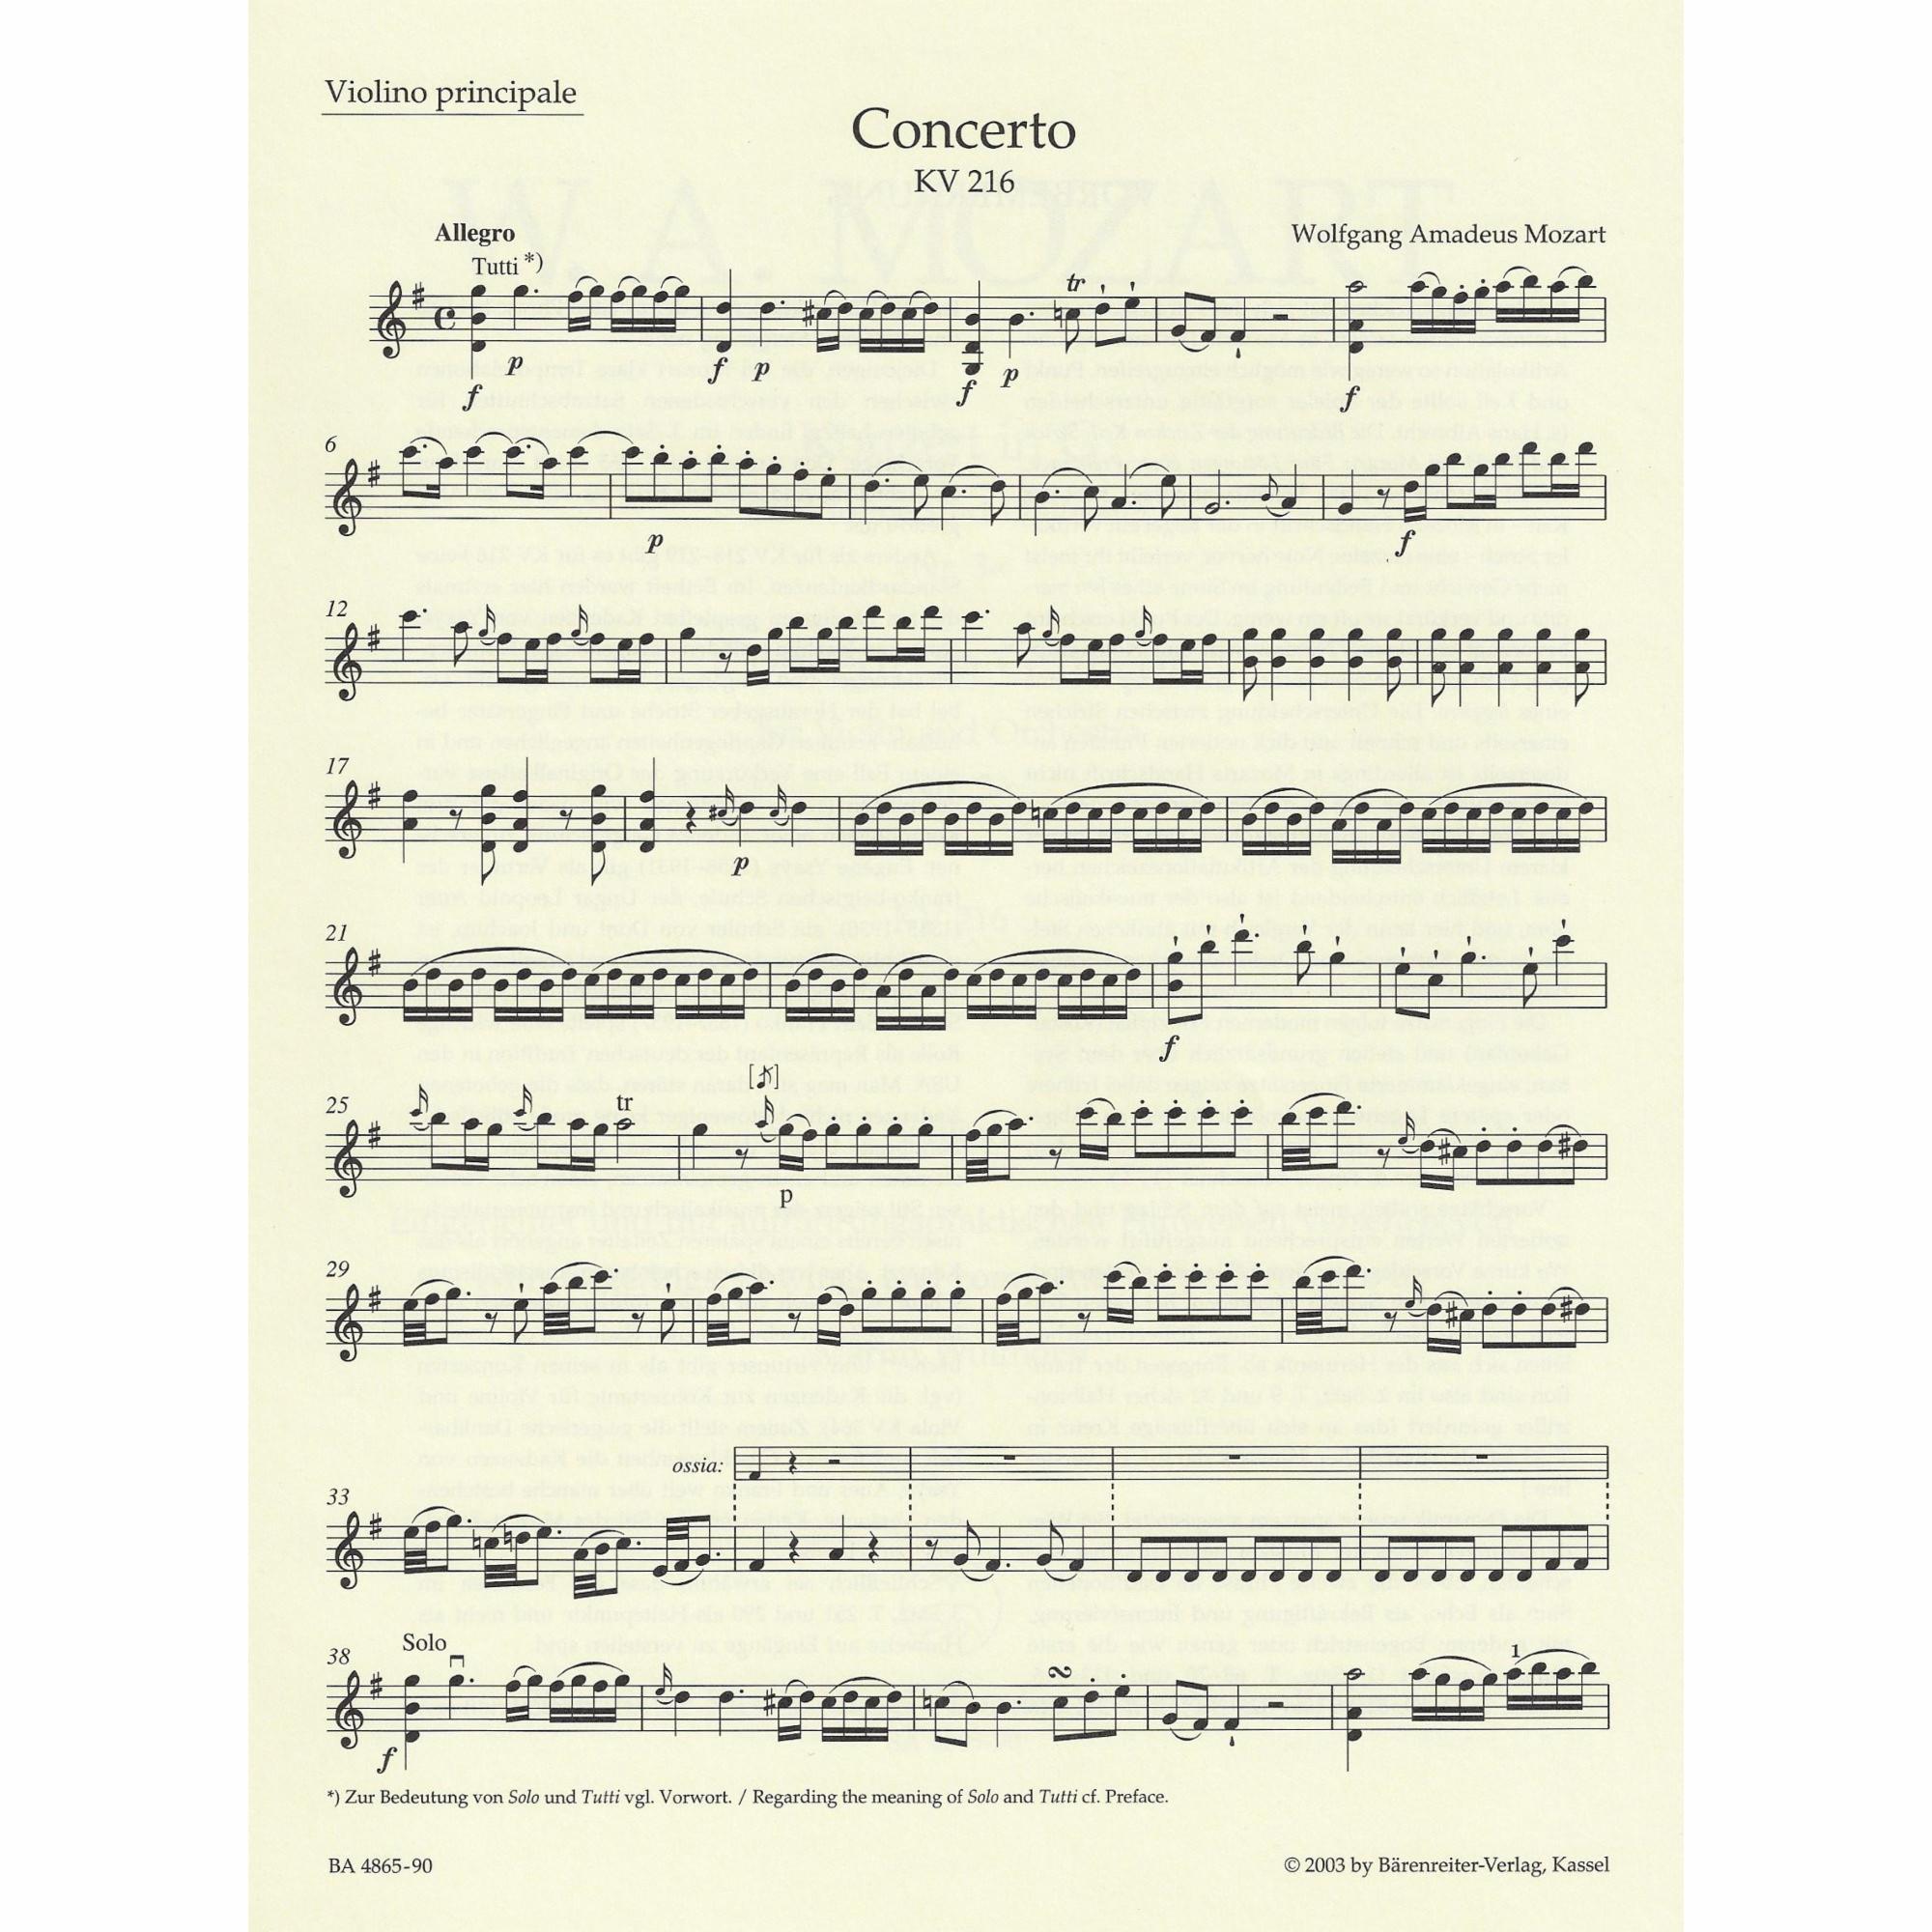 Sample: Marked Violin Part (Pg. 1)